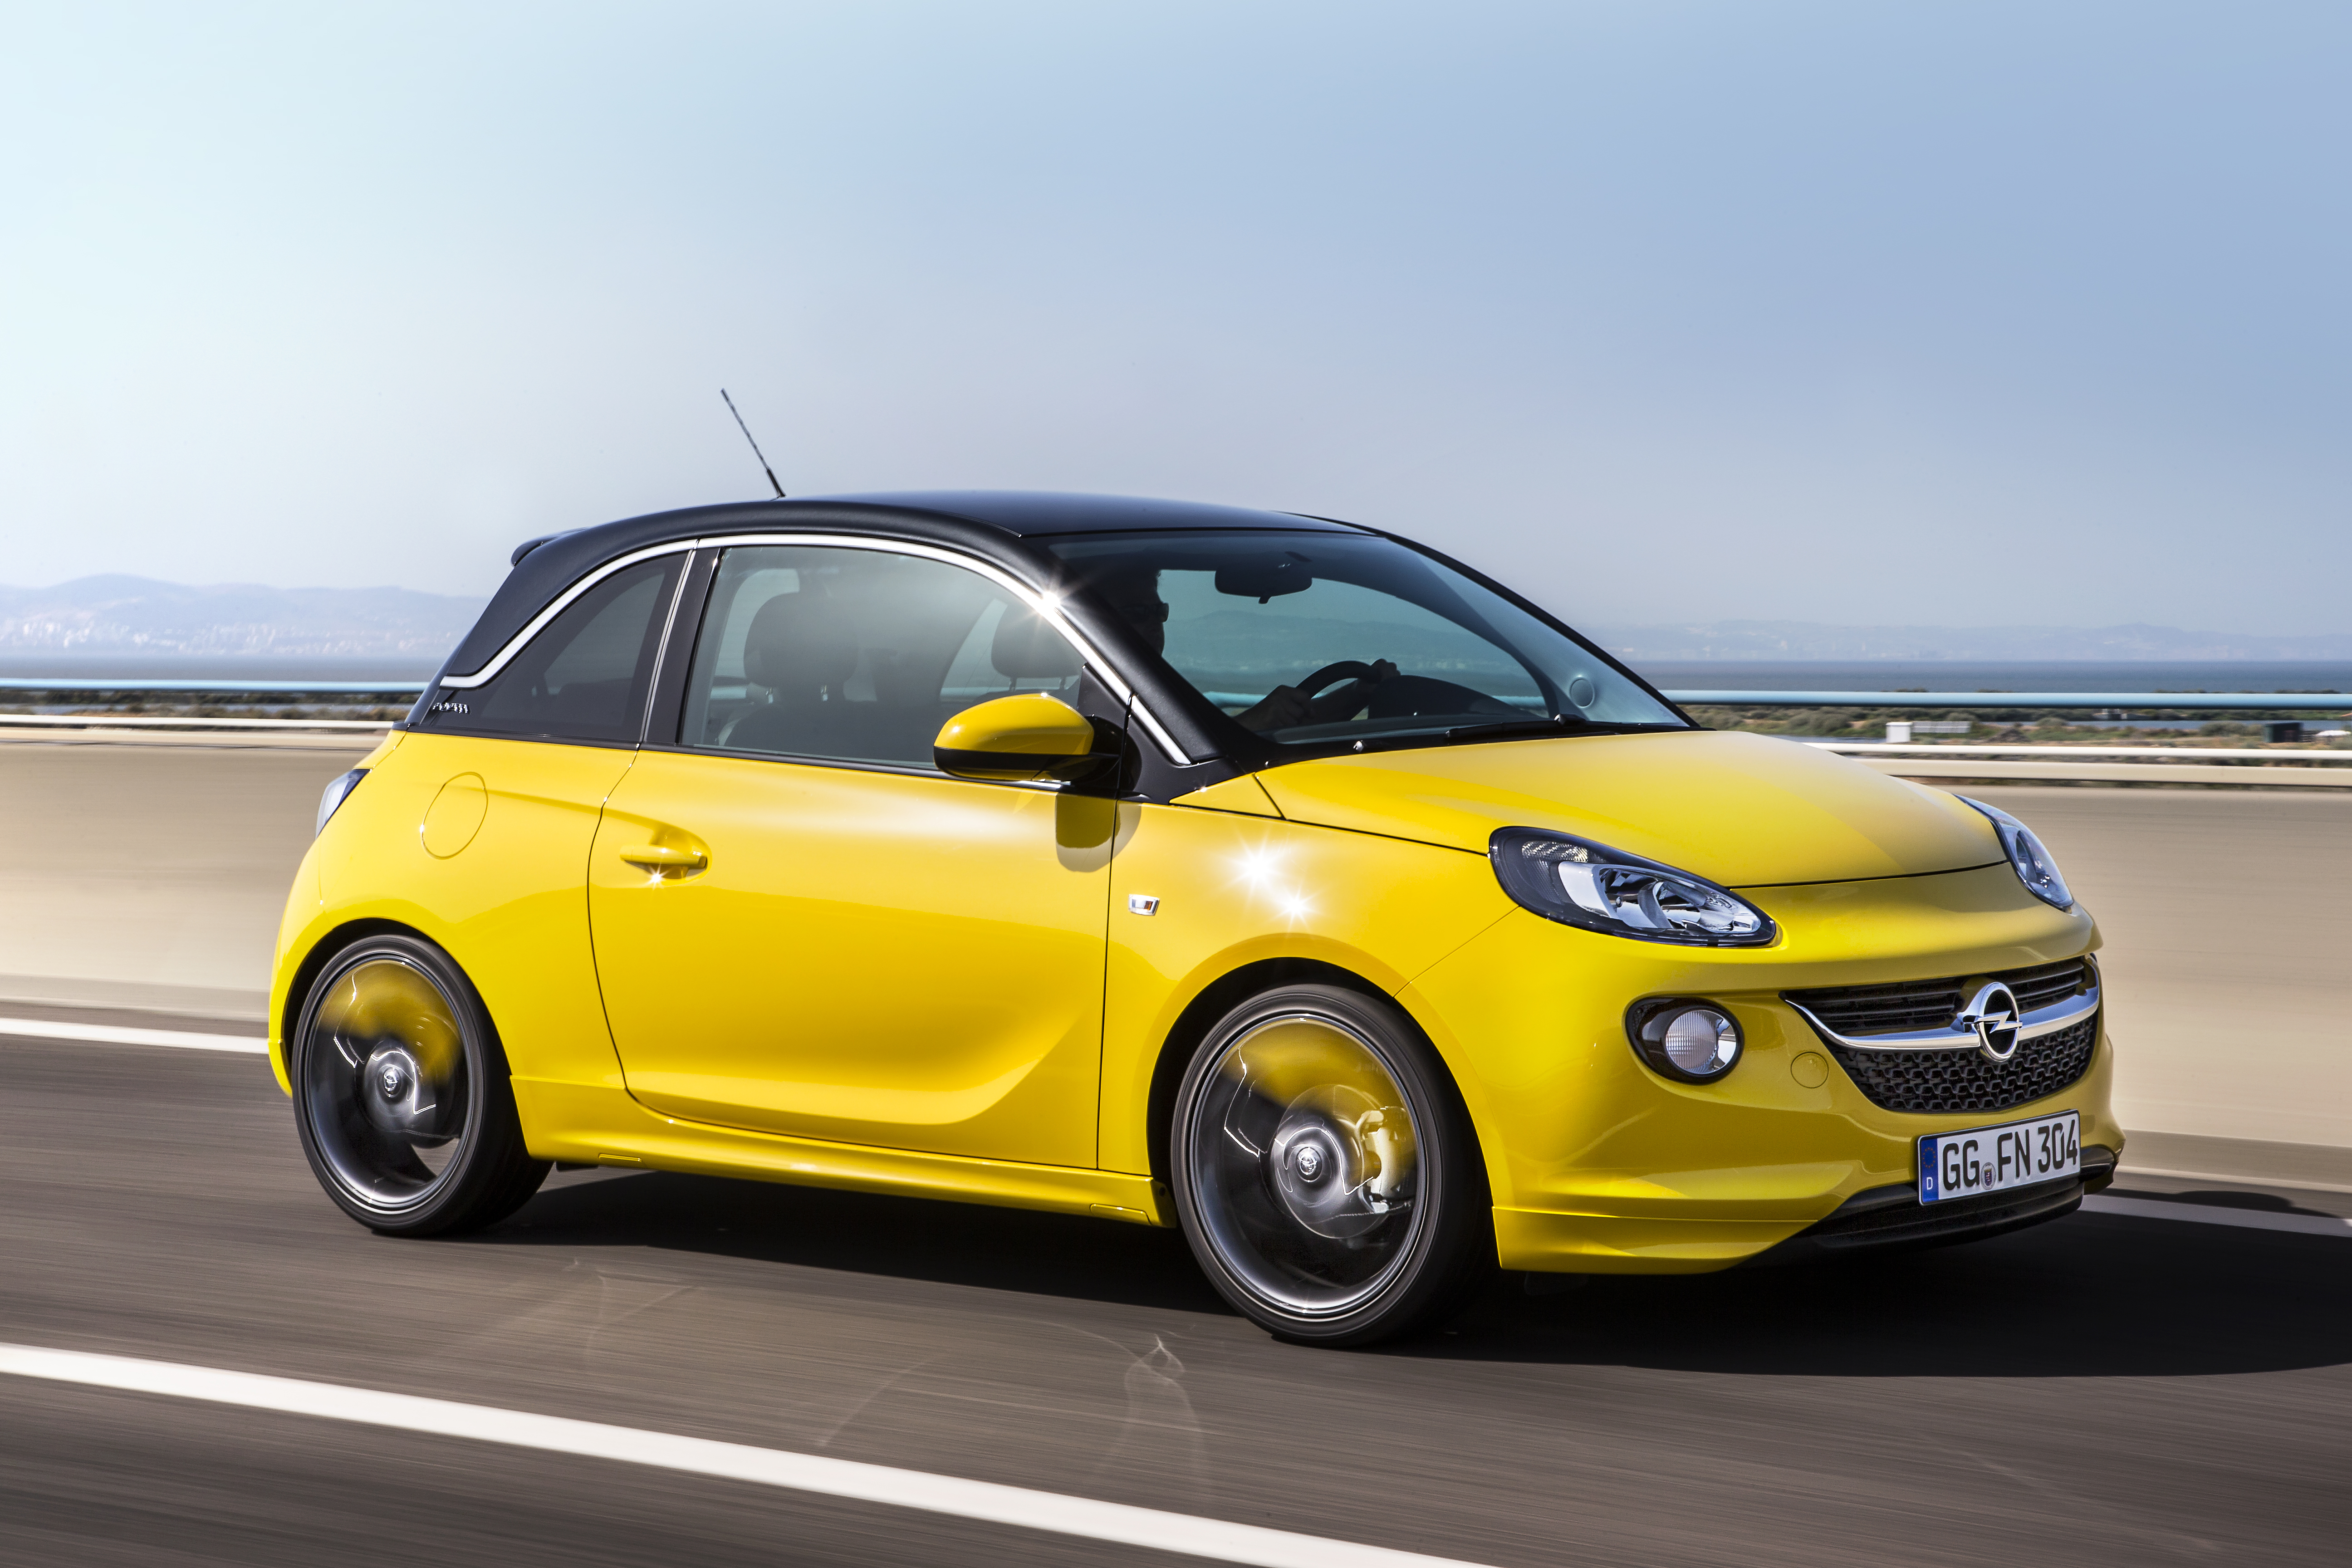 Opel Adam S (2016) Review